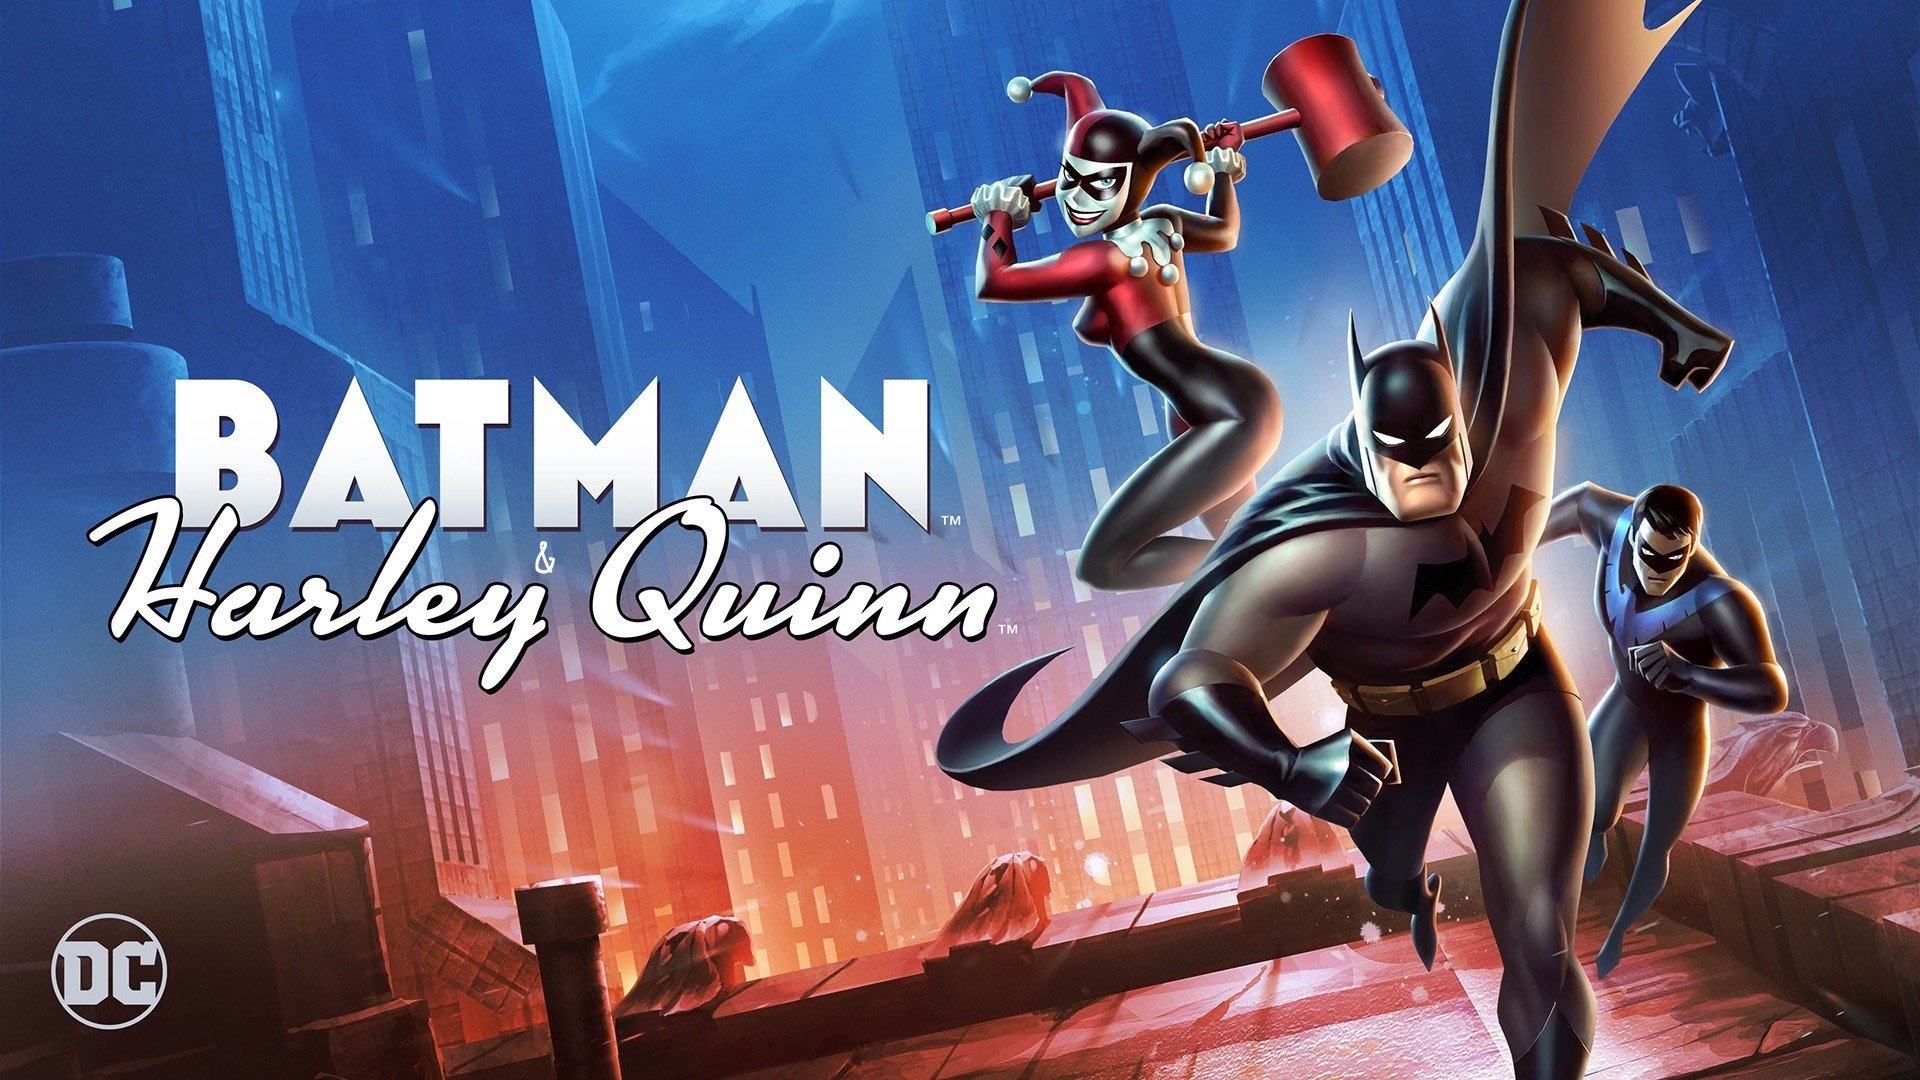 Los mejores fondos de pantalla de Batman And Harley Quinn para la pantalla del teléfono